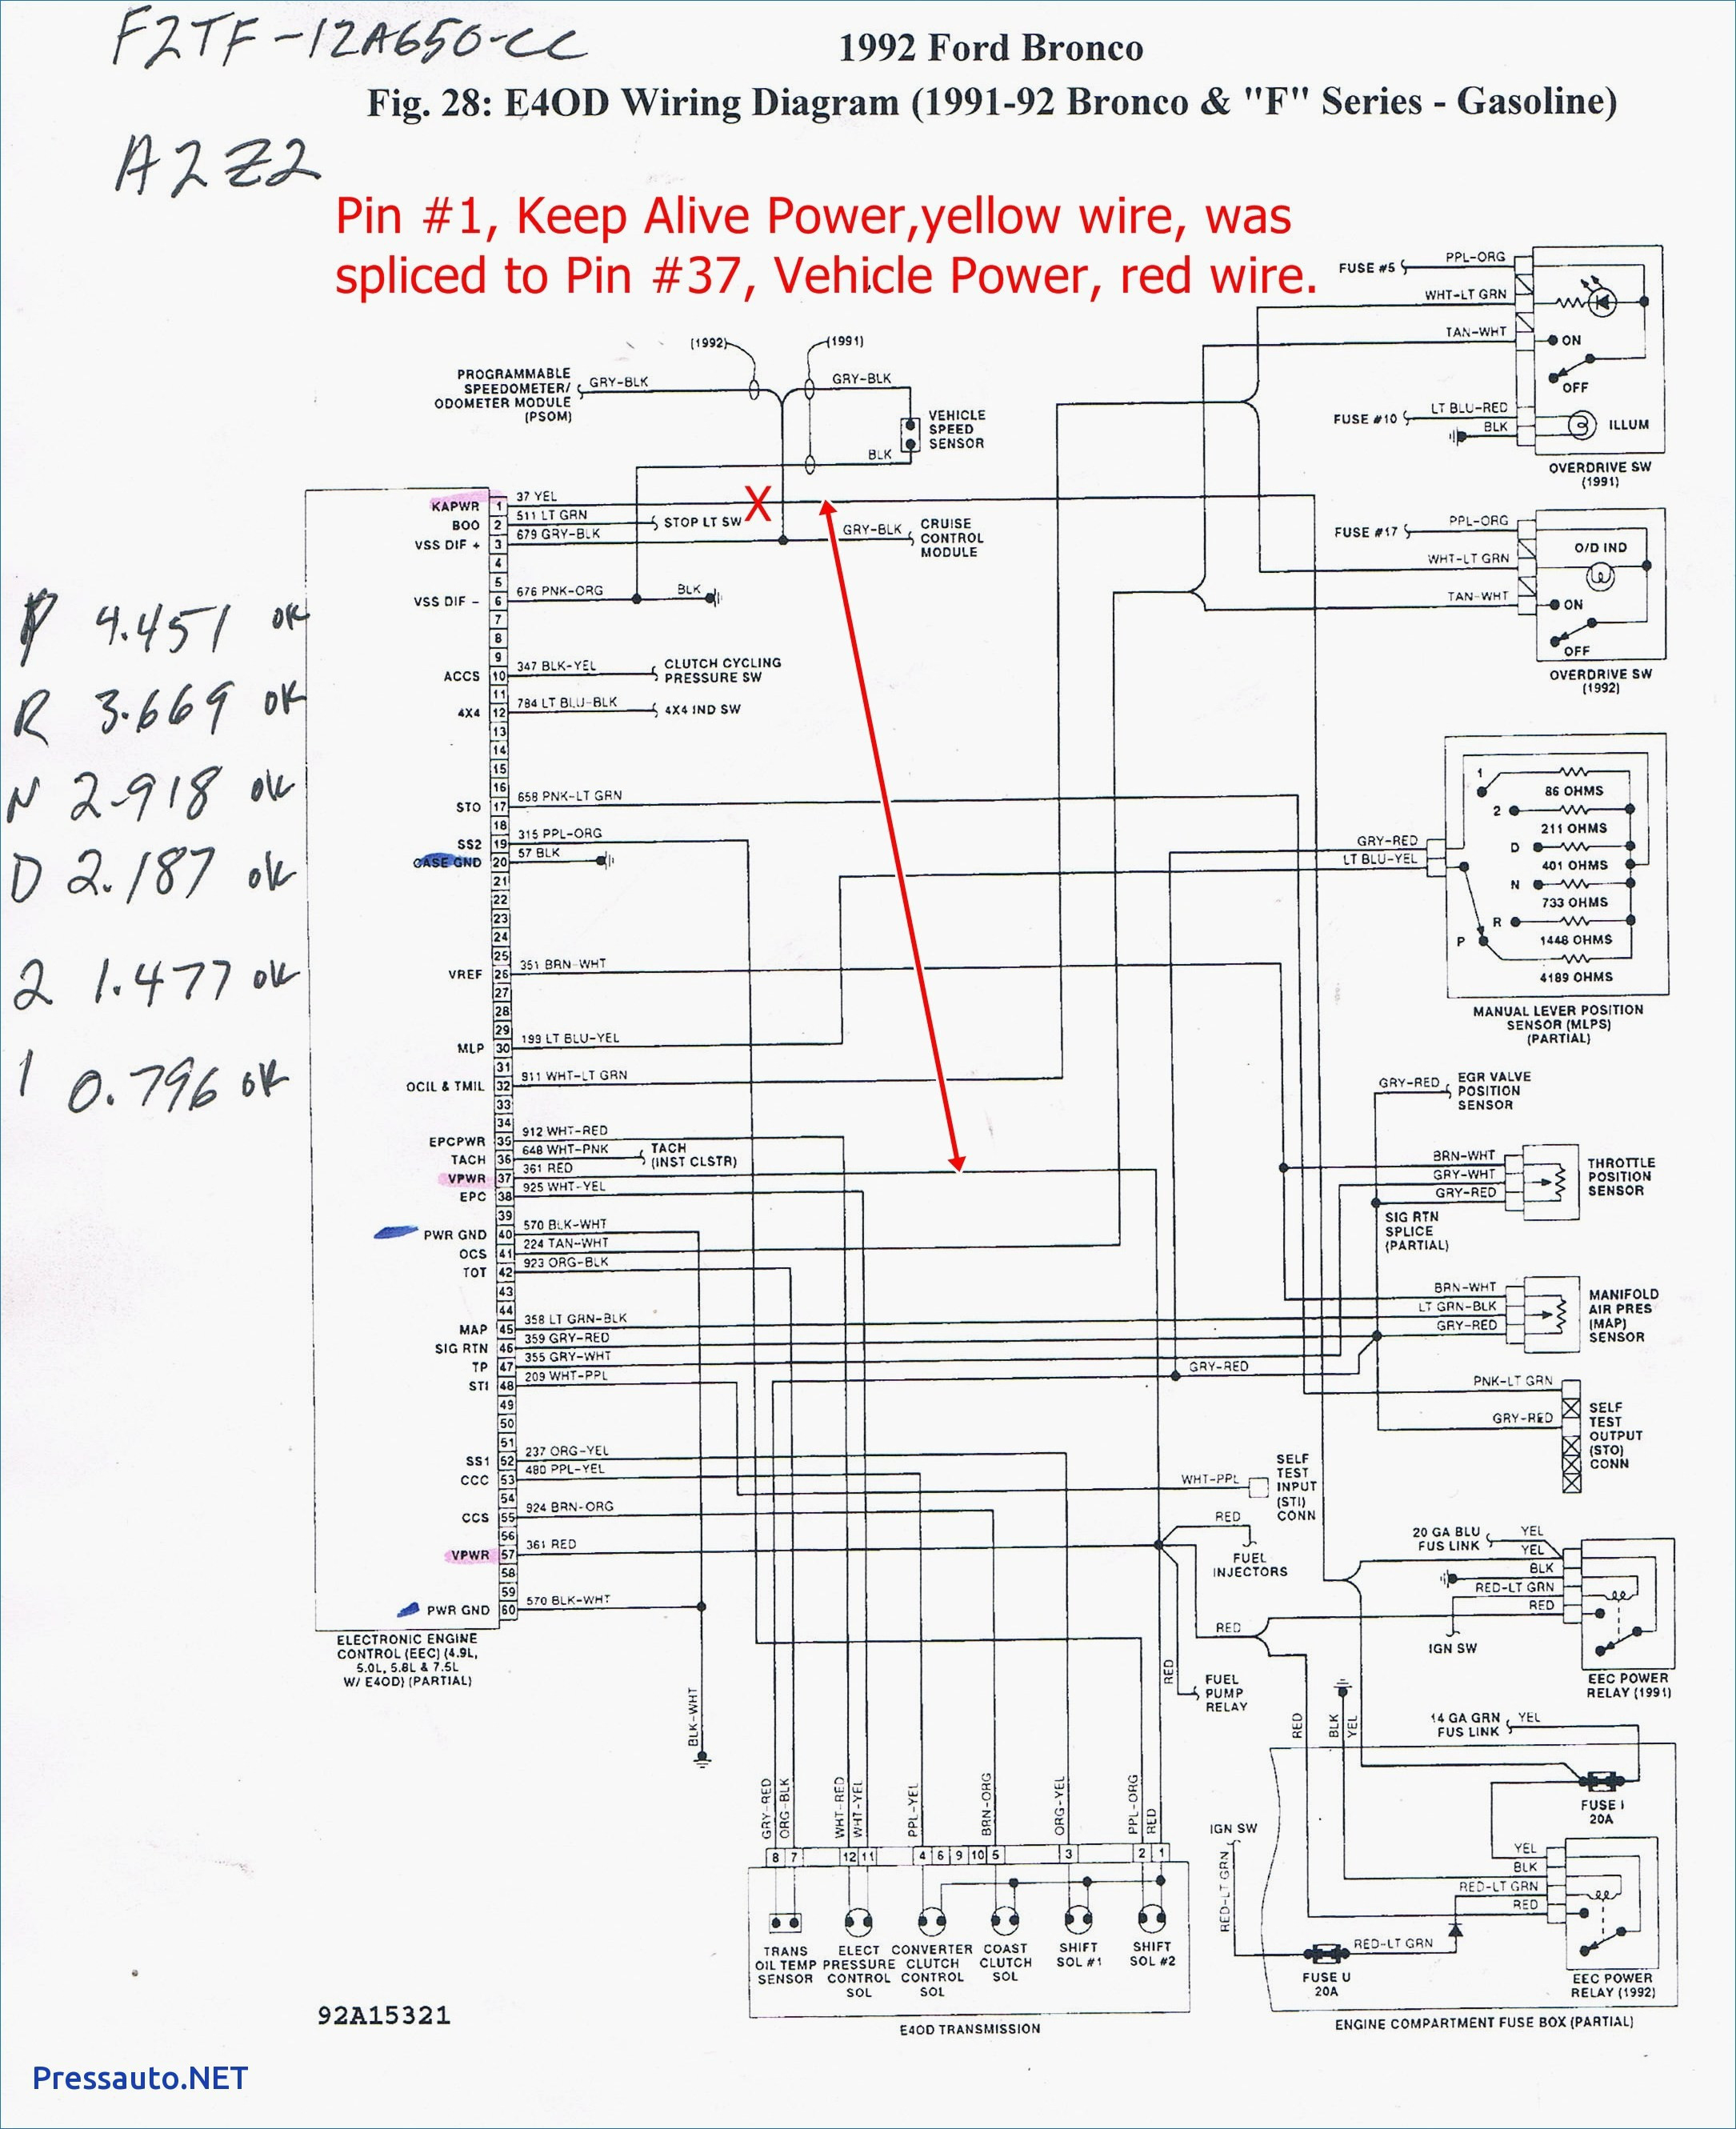 Dodge Ram 1500 Wiring Harness | Wiring Diagram - Dodge Ram Wiring Harness Diagram